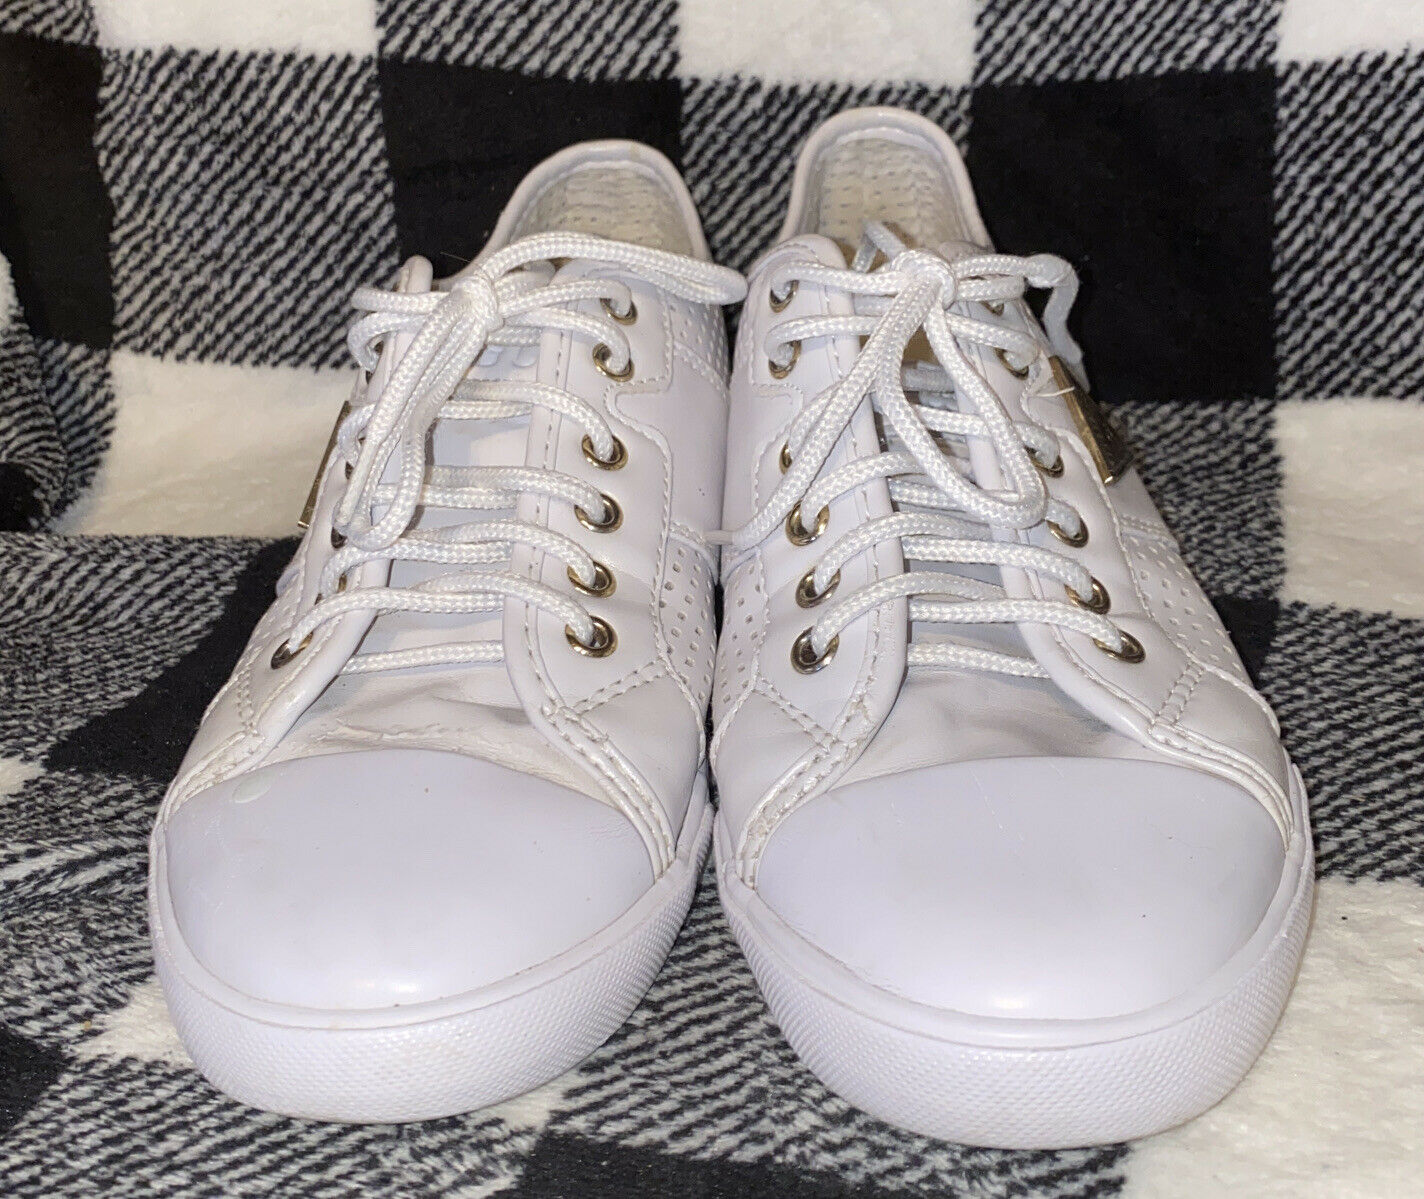 GUESS Women’s Tennis Sneakers Shoes Sz 7 White